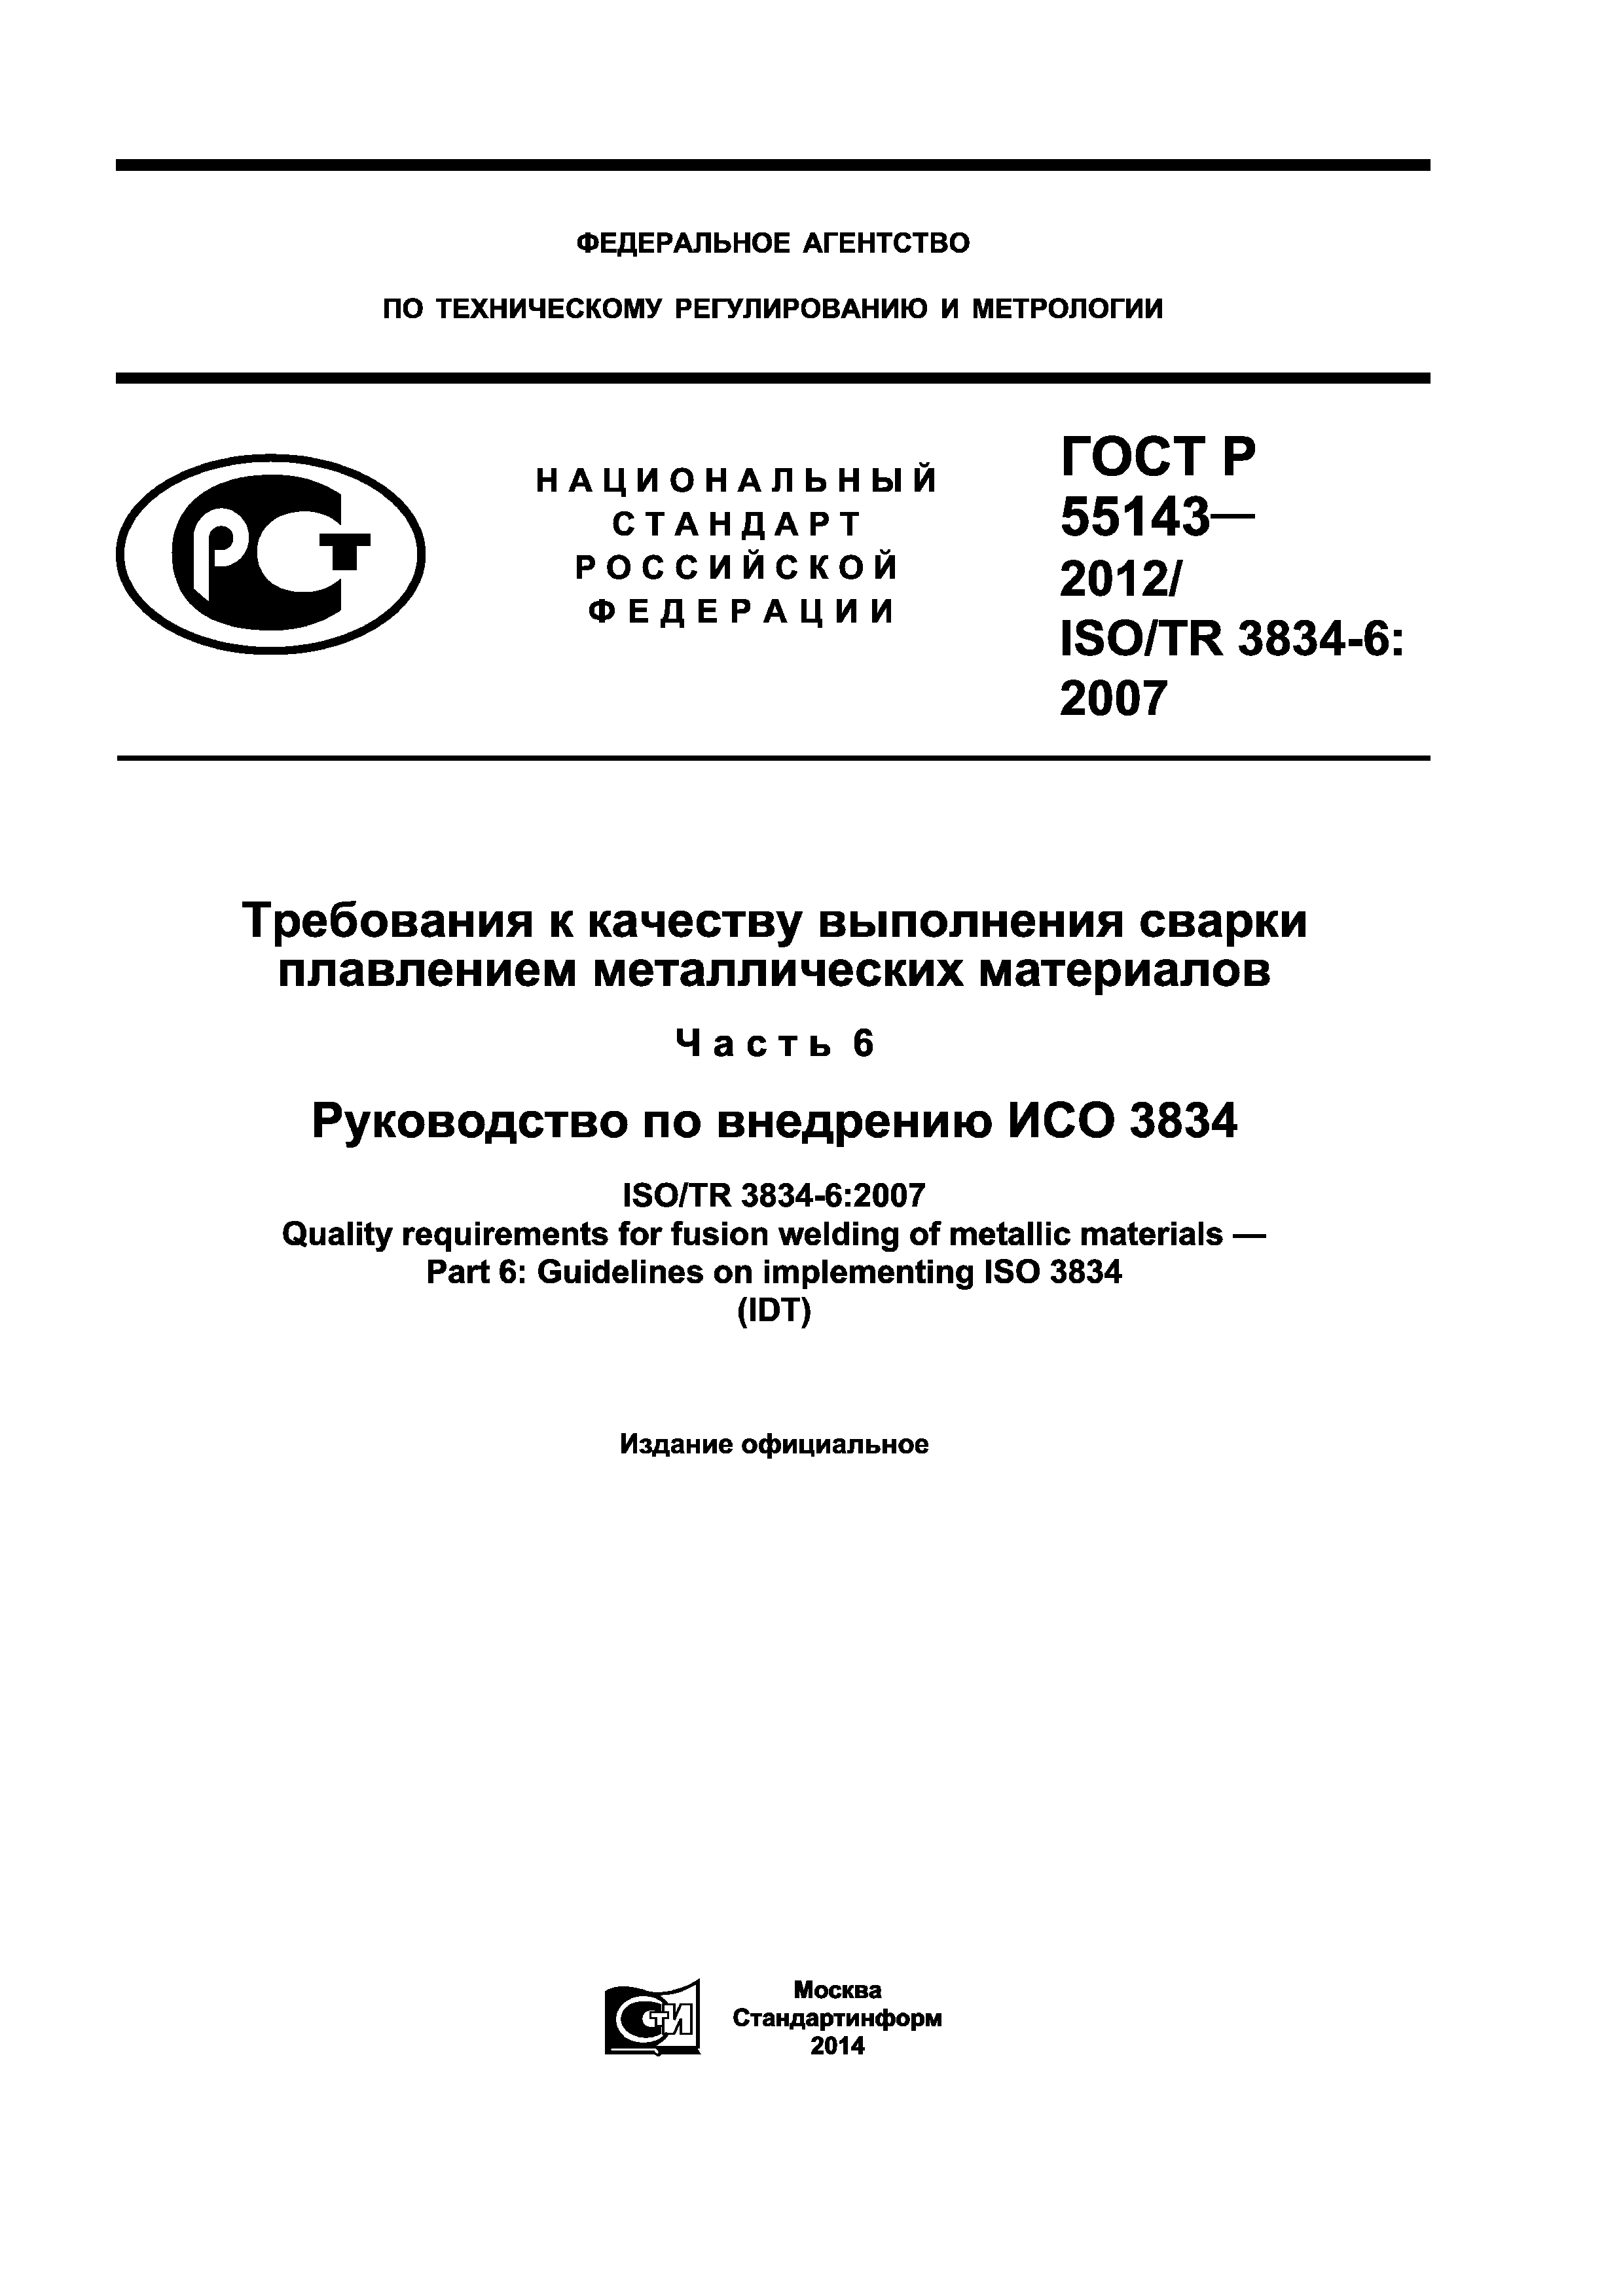 ГОСТ Р 55143-2012